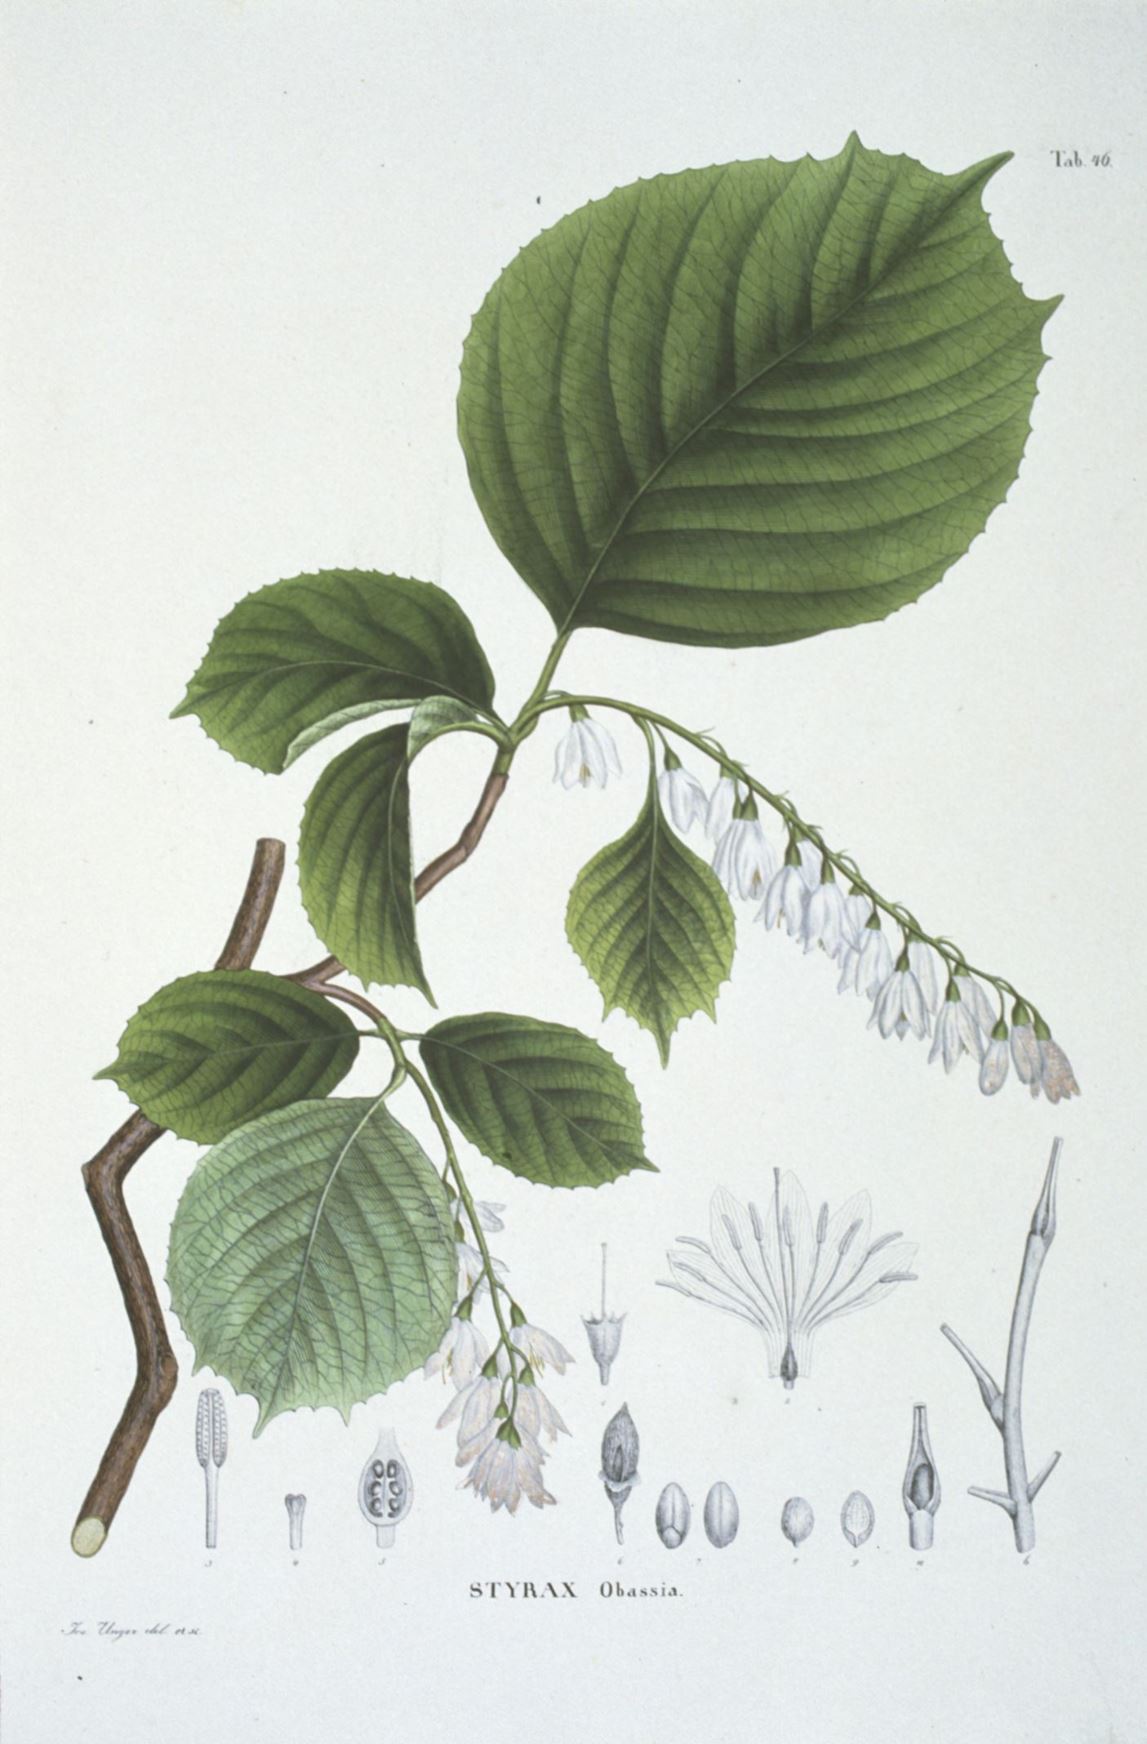 Styrax obassia - Rondbladige storaxboom, Big leaf Storax, ハクウンボク Haku-unboku, 玉铃花 yu ling hua